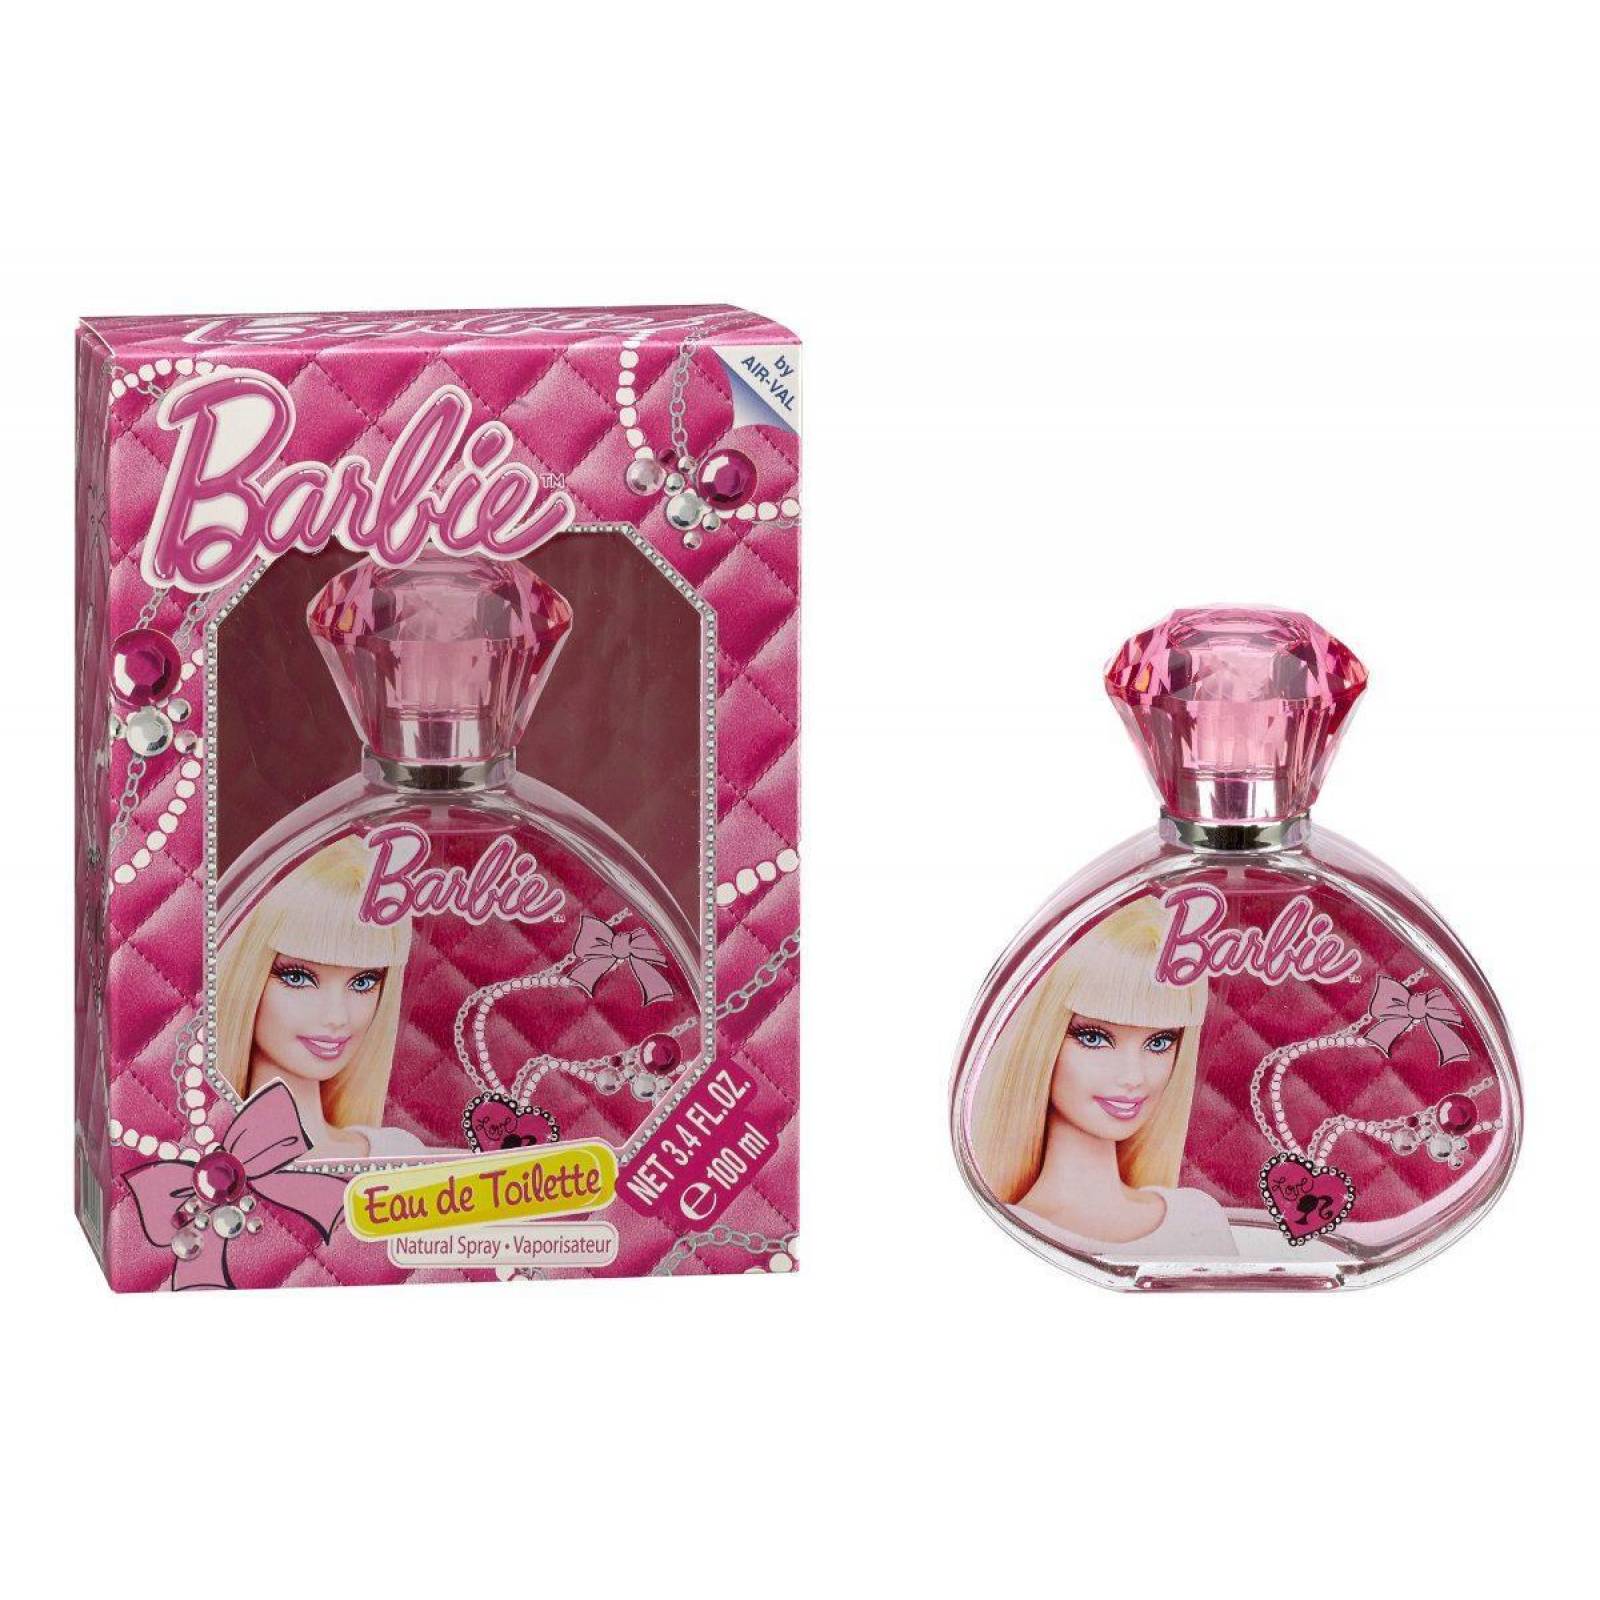 Perfume fashion de barbie edt 100 ml Sears